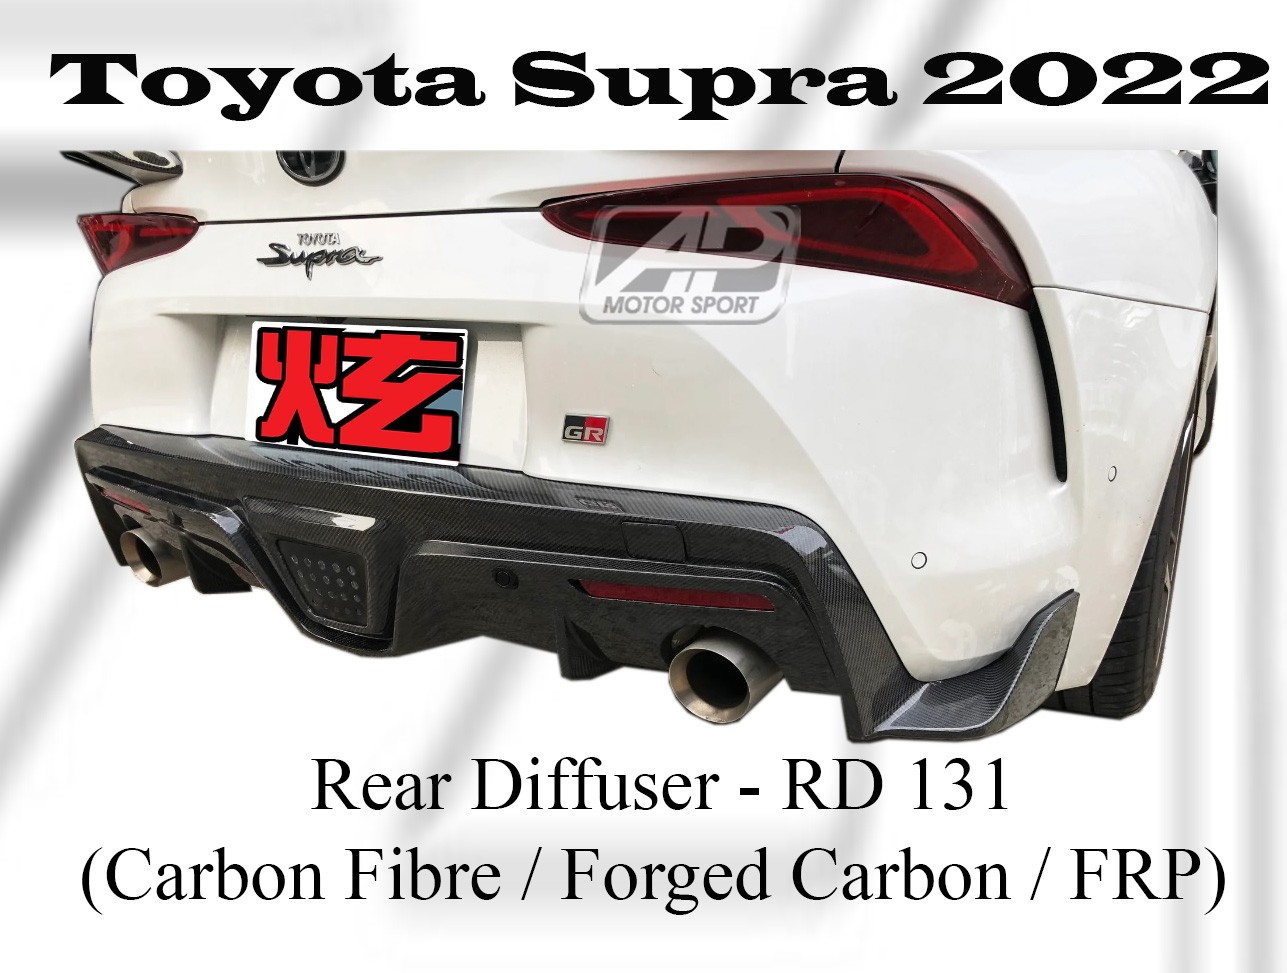 Toyota Supra 2022 Rear Diffuser (Carbon Fibre / Forged Carbo